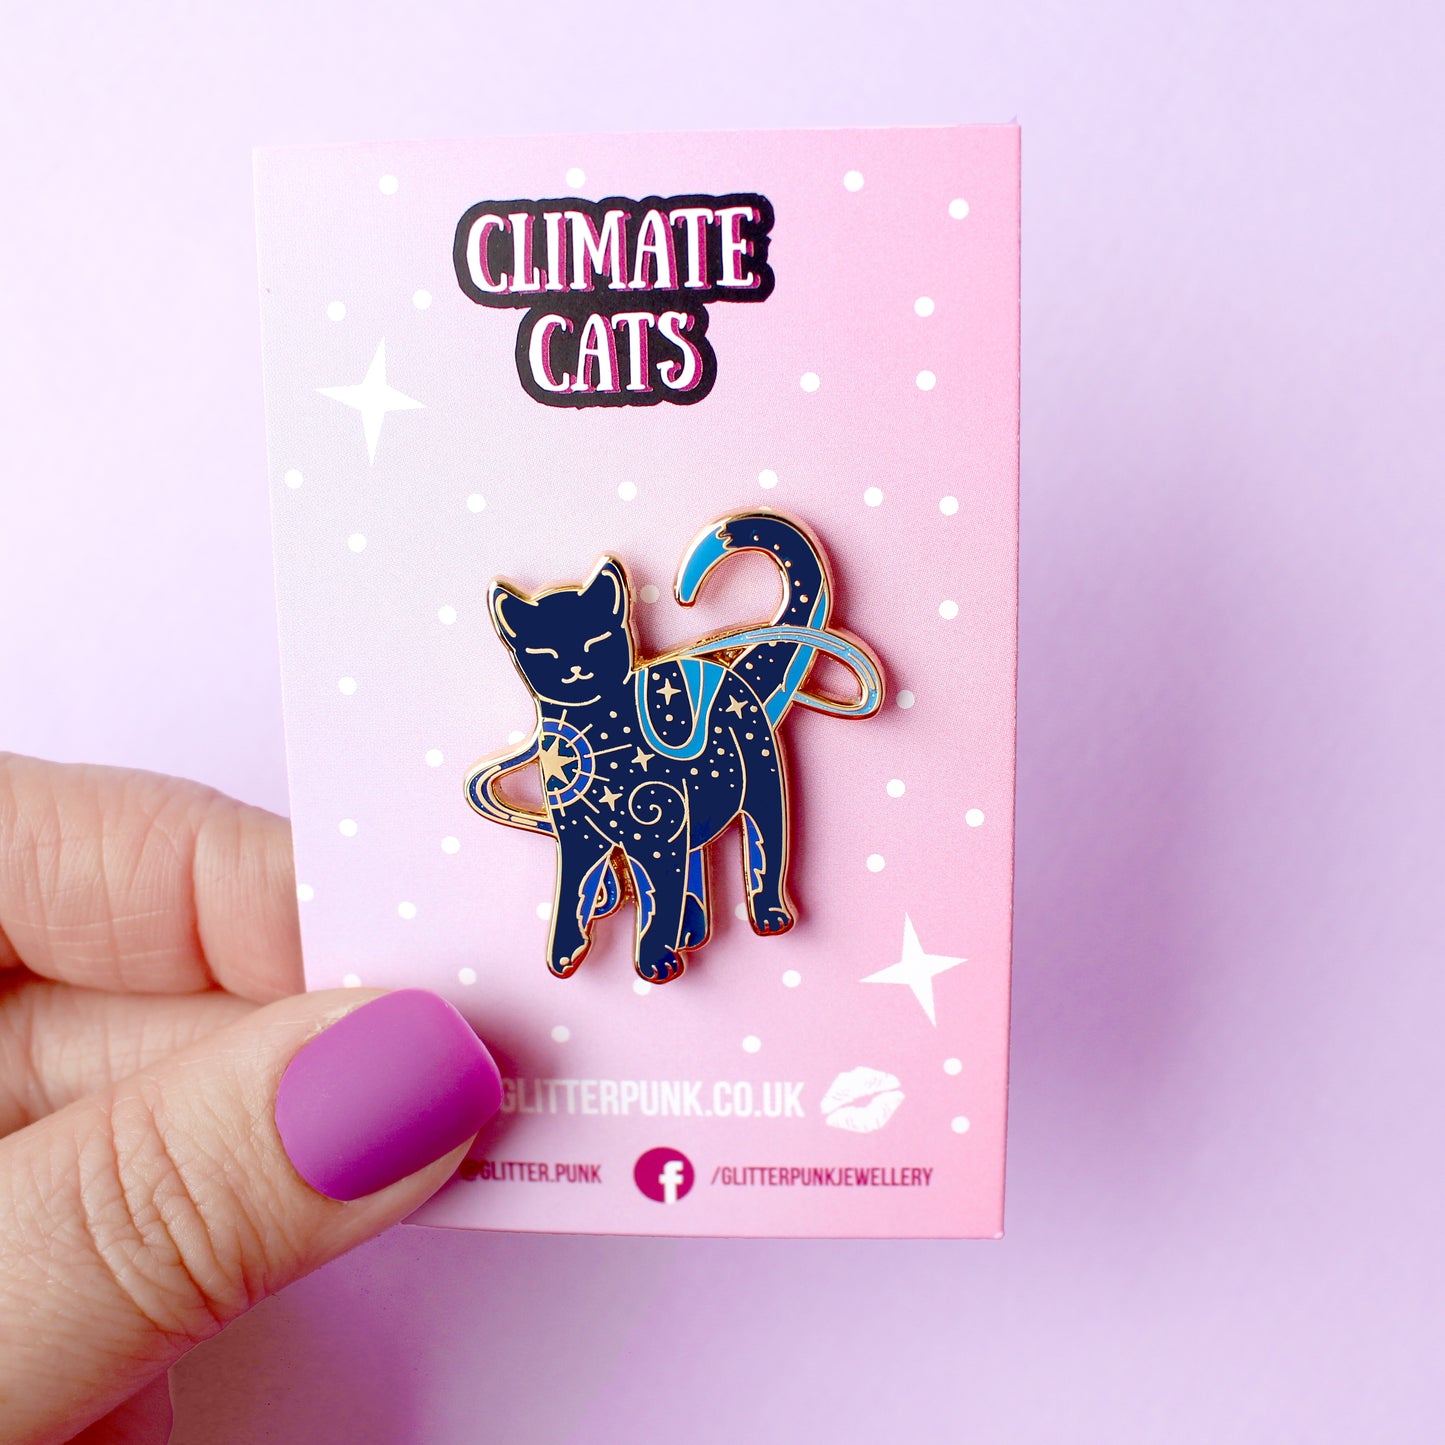 Star Cat Enamel Pin - Climate Cats